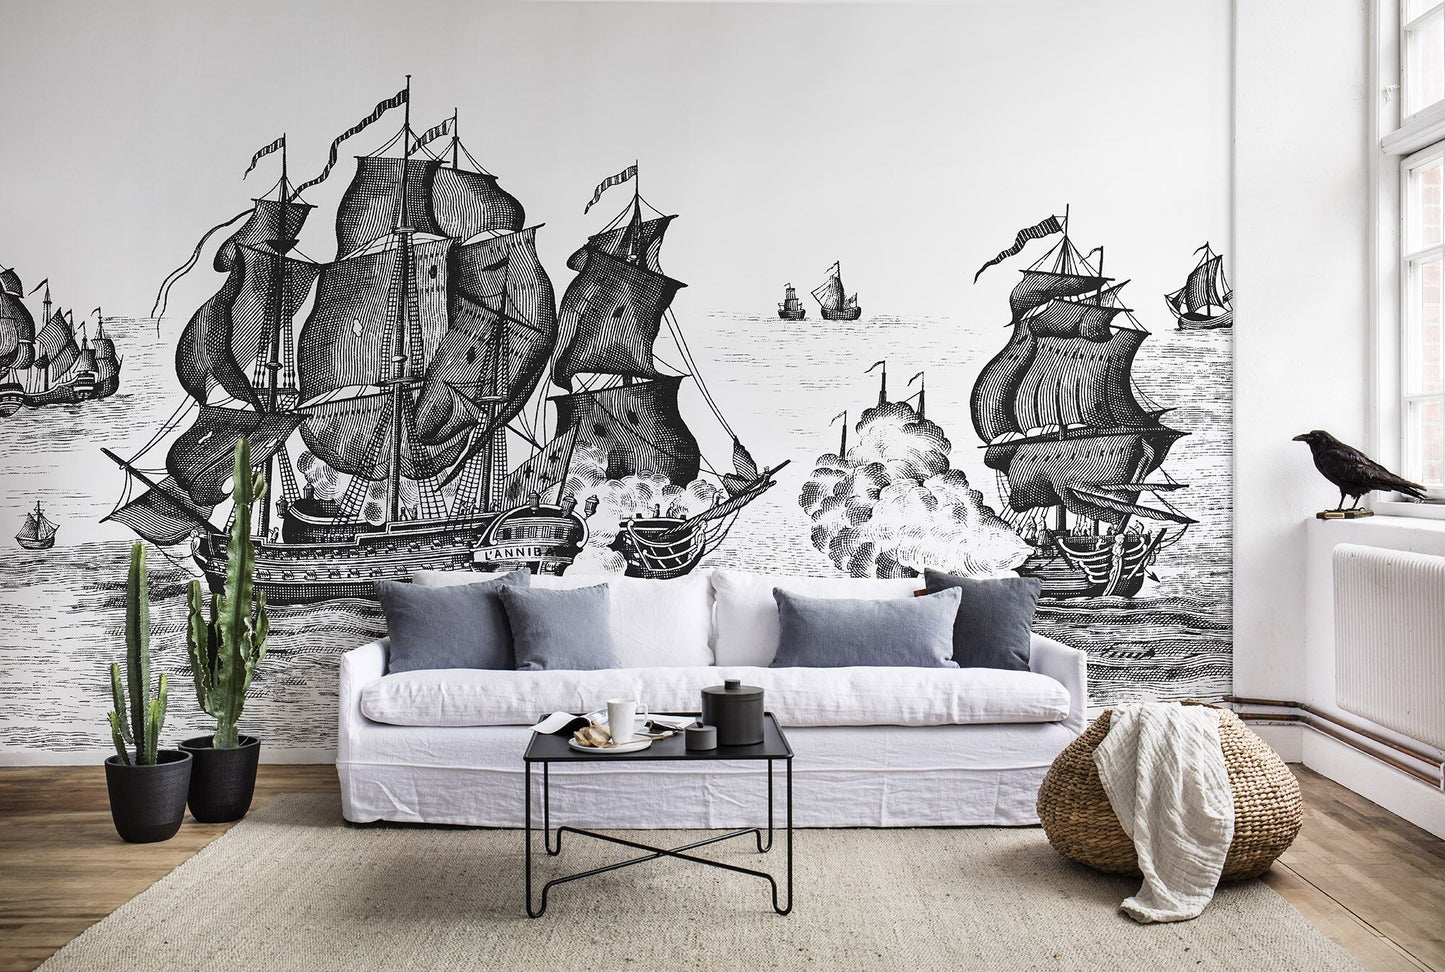 Pirates Adventure B&W Mural Wallpaper (SqM)